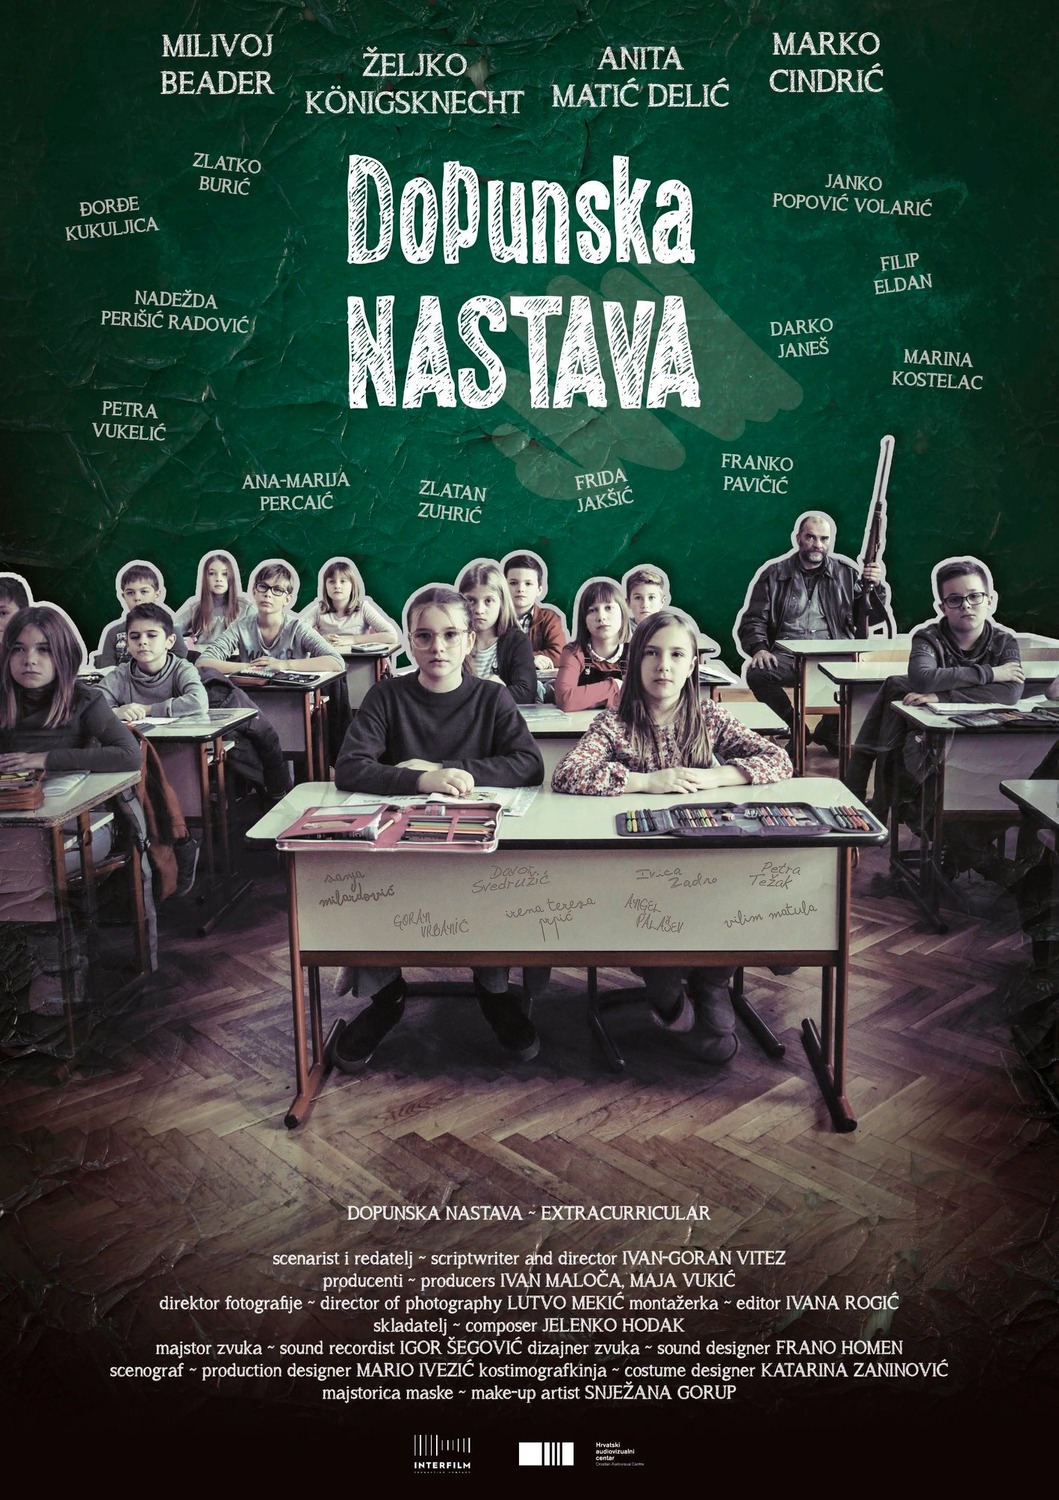 Extra Large Movie Poster Image for Dopunska nastava 